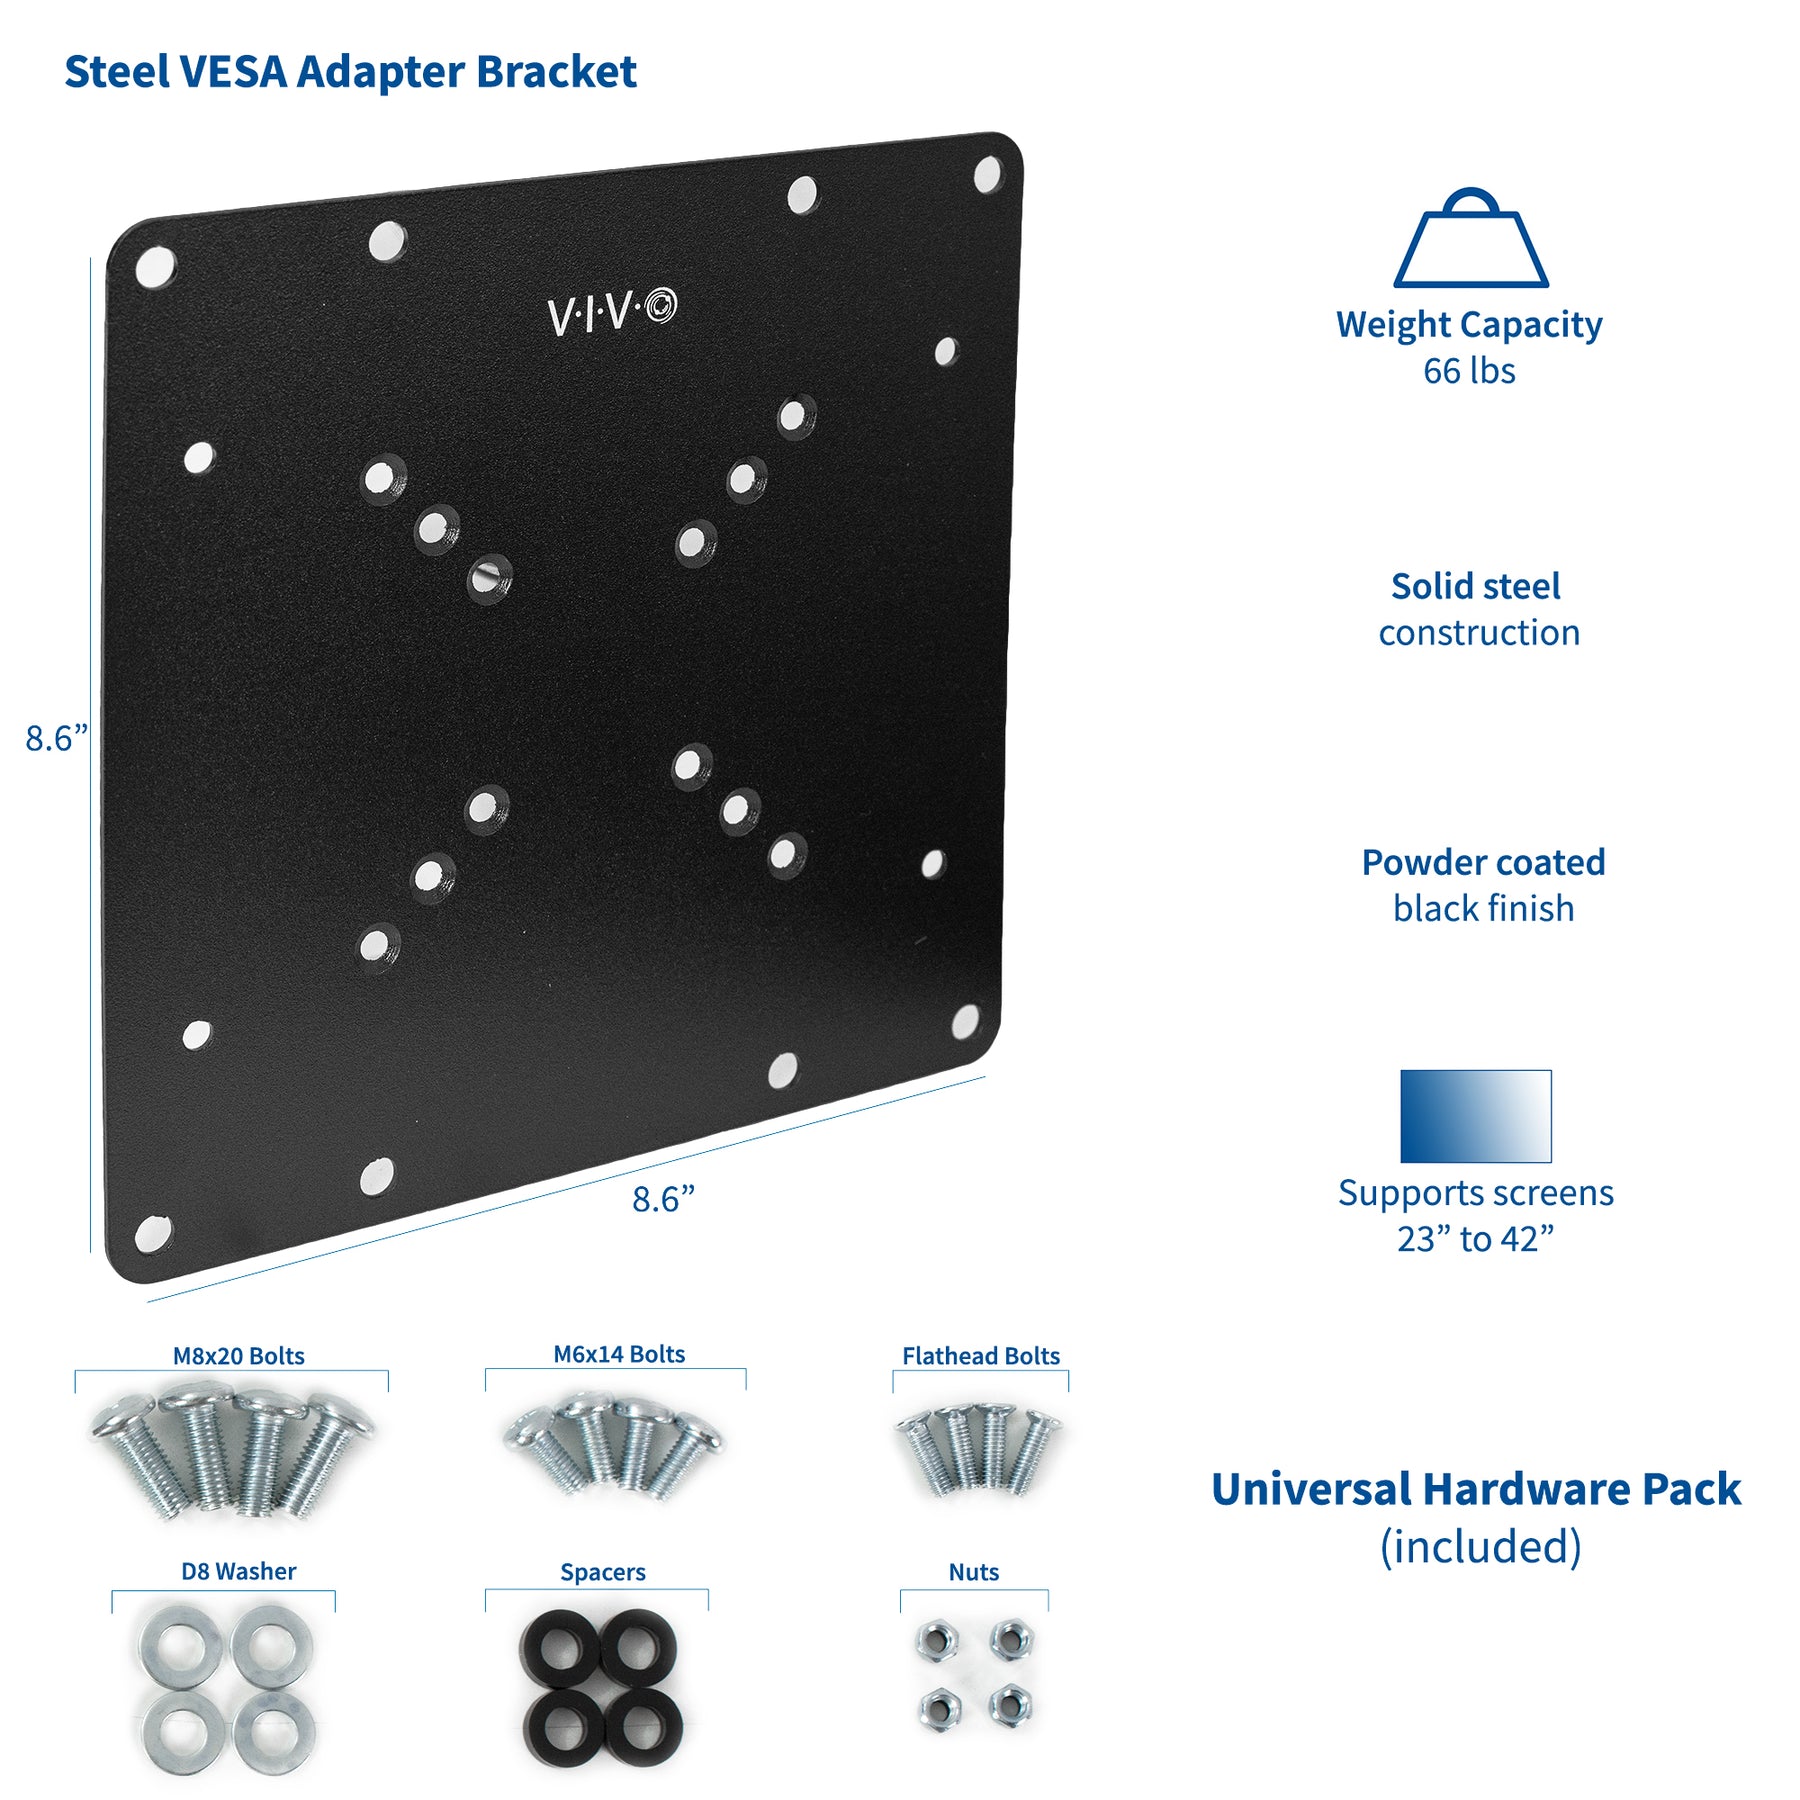 VIVO Steel Adapter VESA Bracket 400x200mm for TV Screen Sizes 32 to 55 